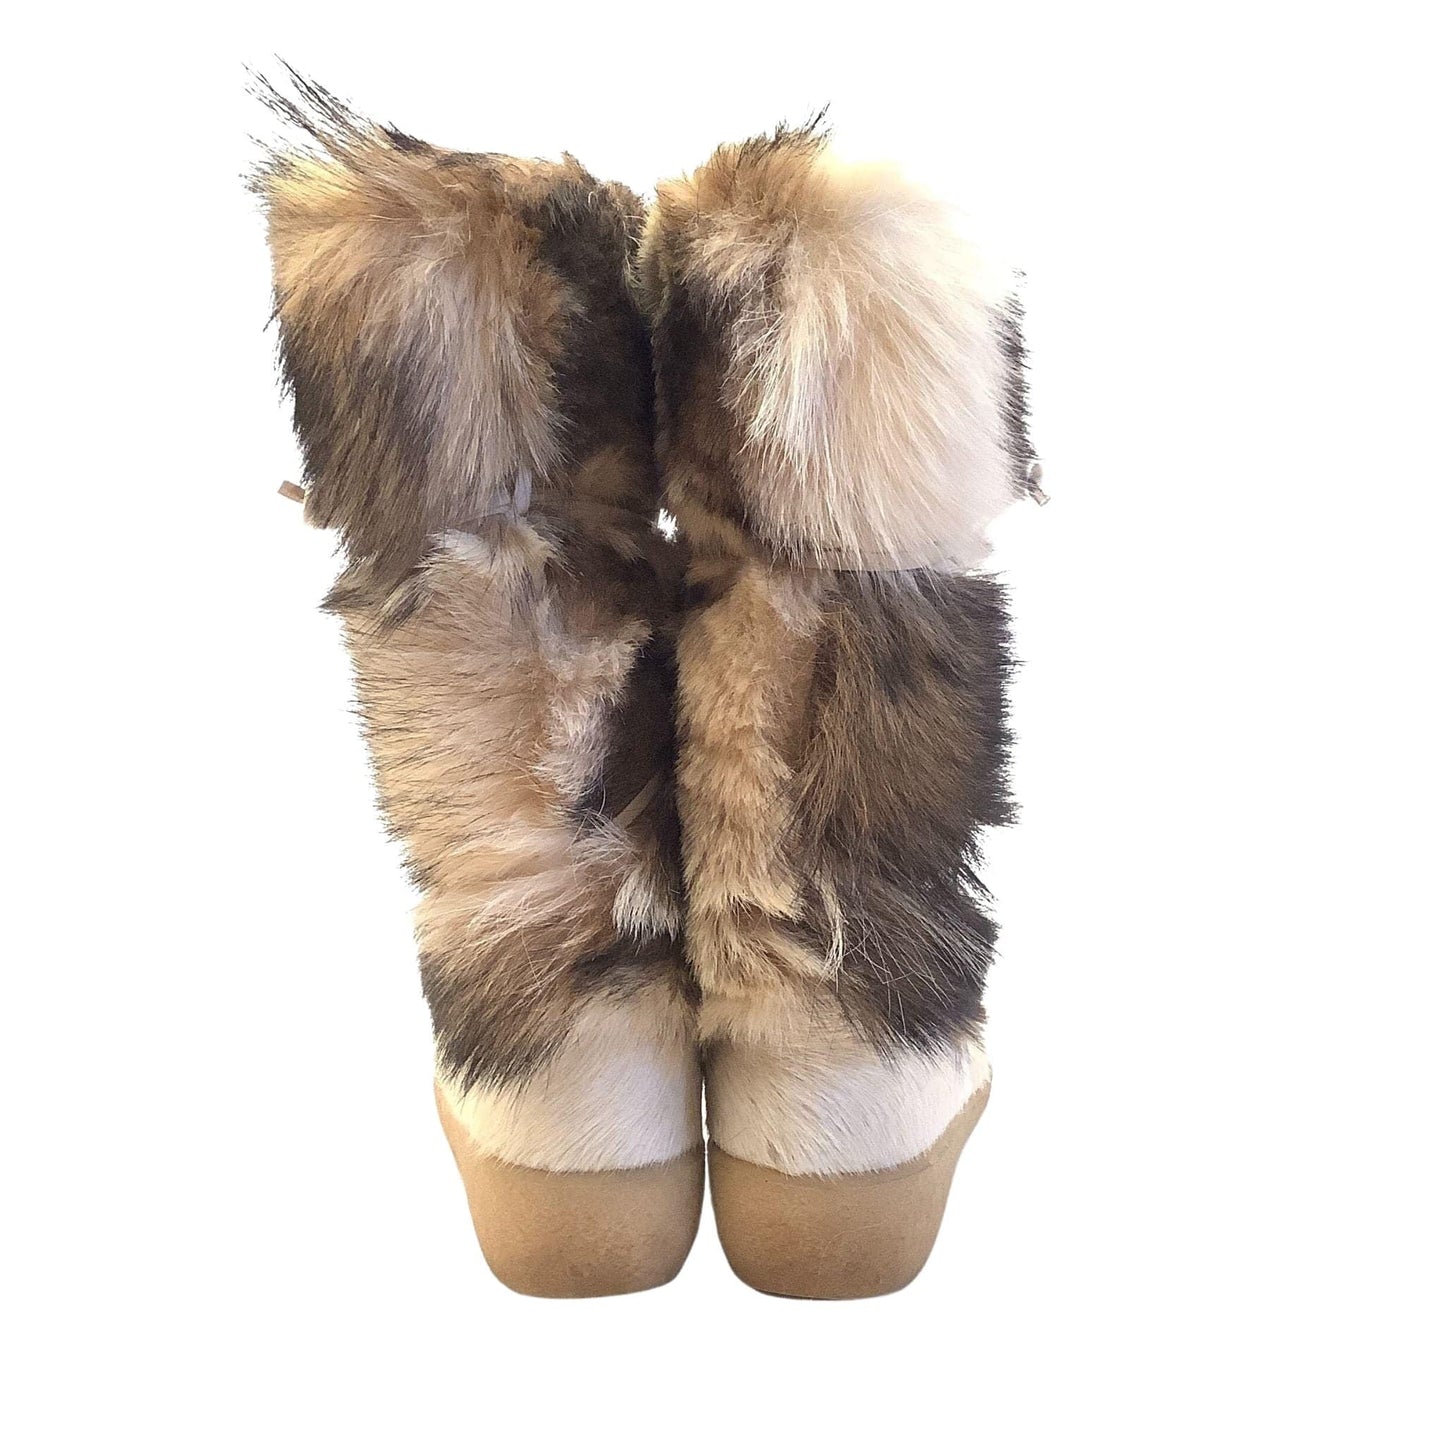 Vintage Fur Snow Boots Multi / Mixed / Vintage 1980s